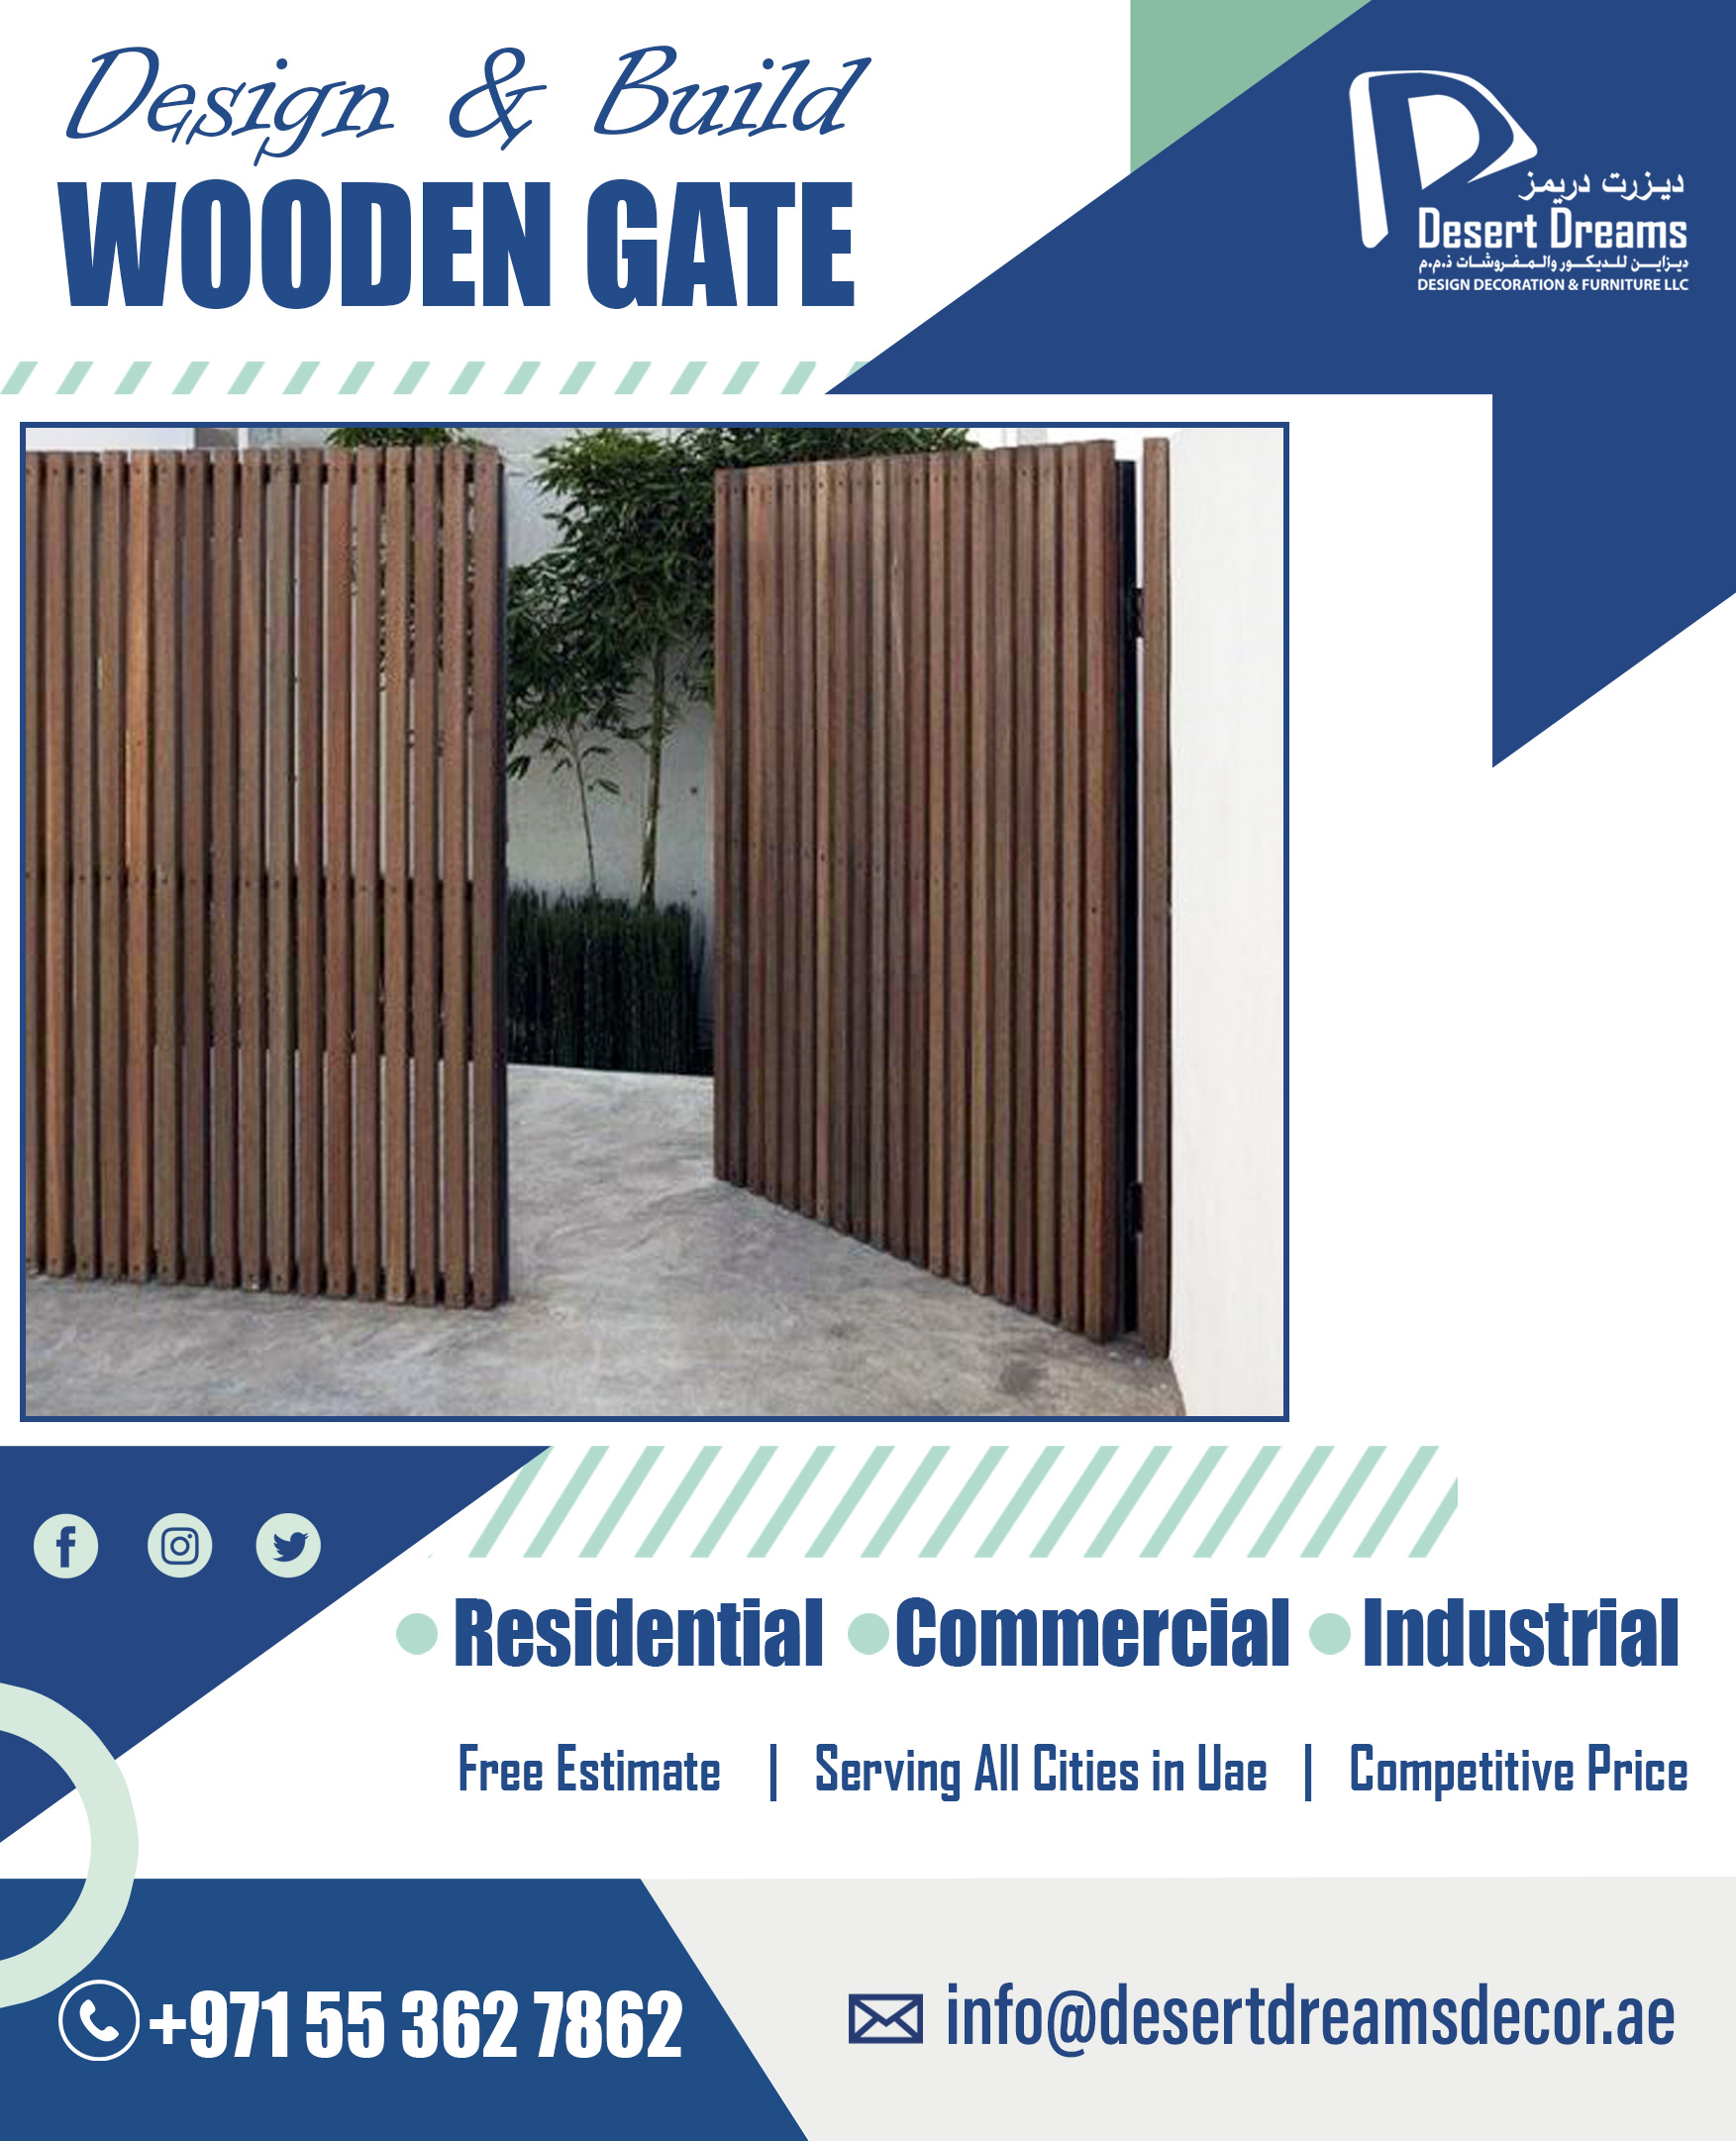 Wooden Fence Company in UAE (1).jpg